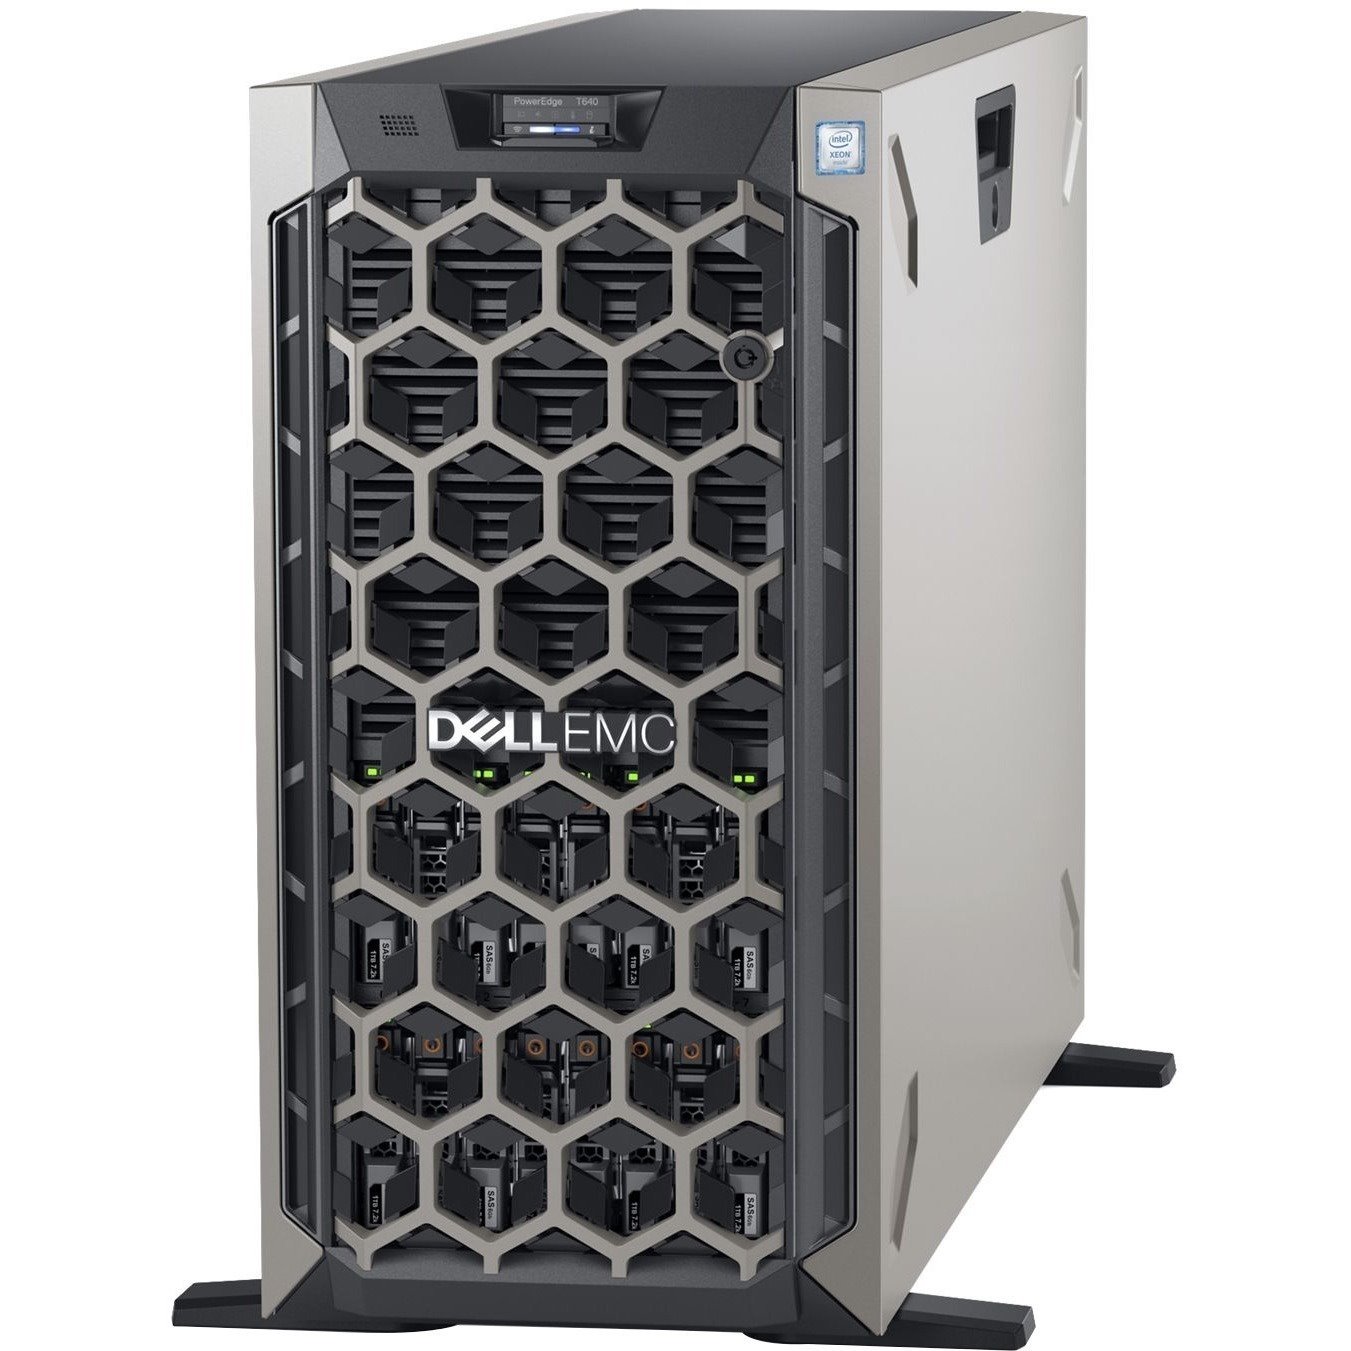 Dell EMC PowerEdge T640 5U Tower Server - 1 x Intel Xeon Silver 4208 2.10 GHz - 16 GB RAM - 1 TB HDD - Serial ATA, 12Gb/s SAS Controller